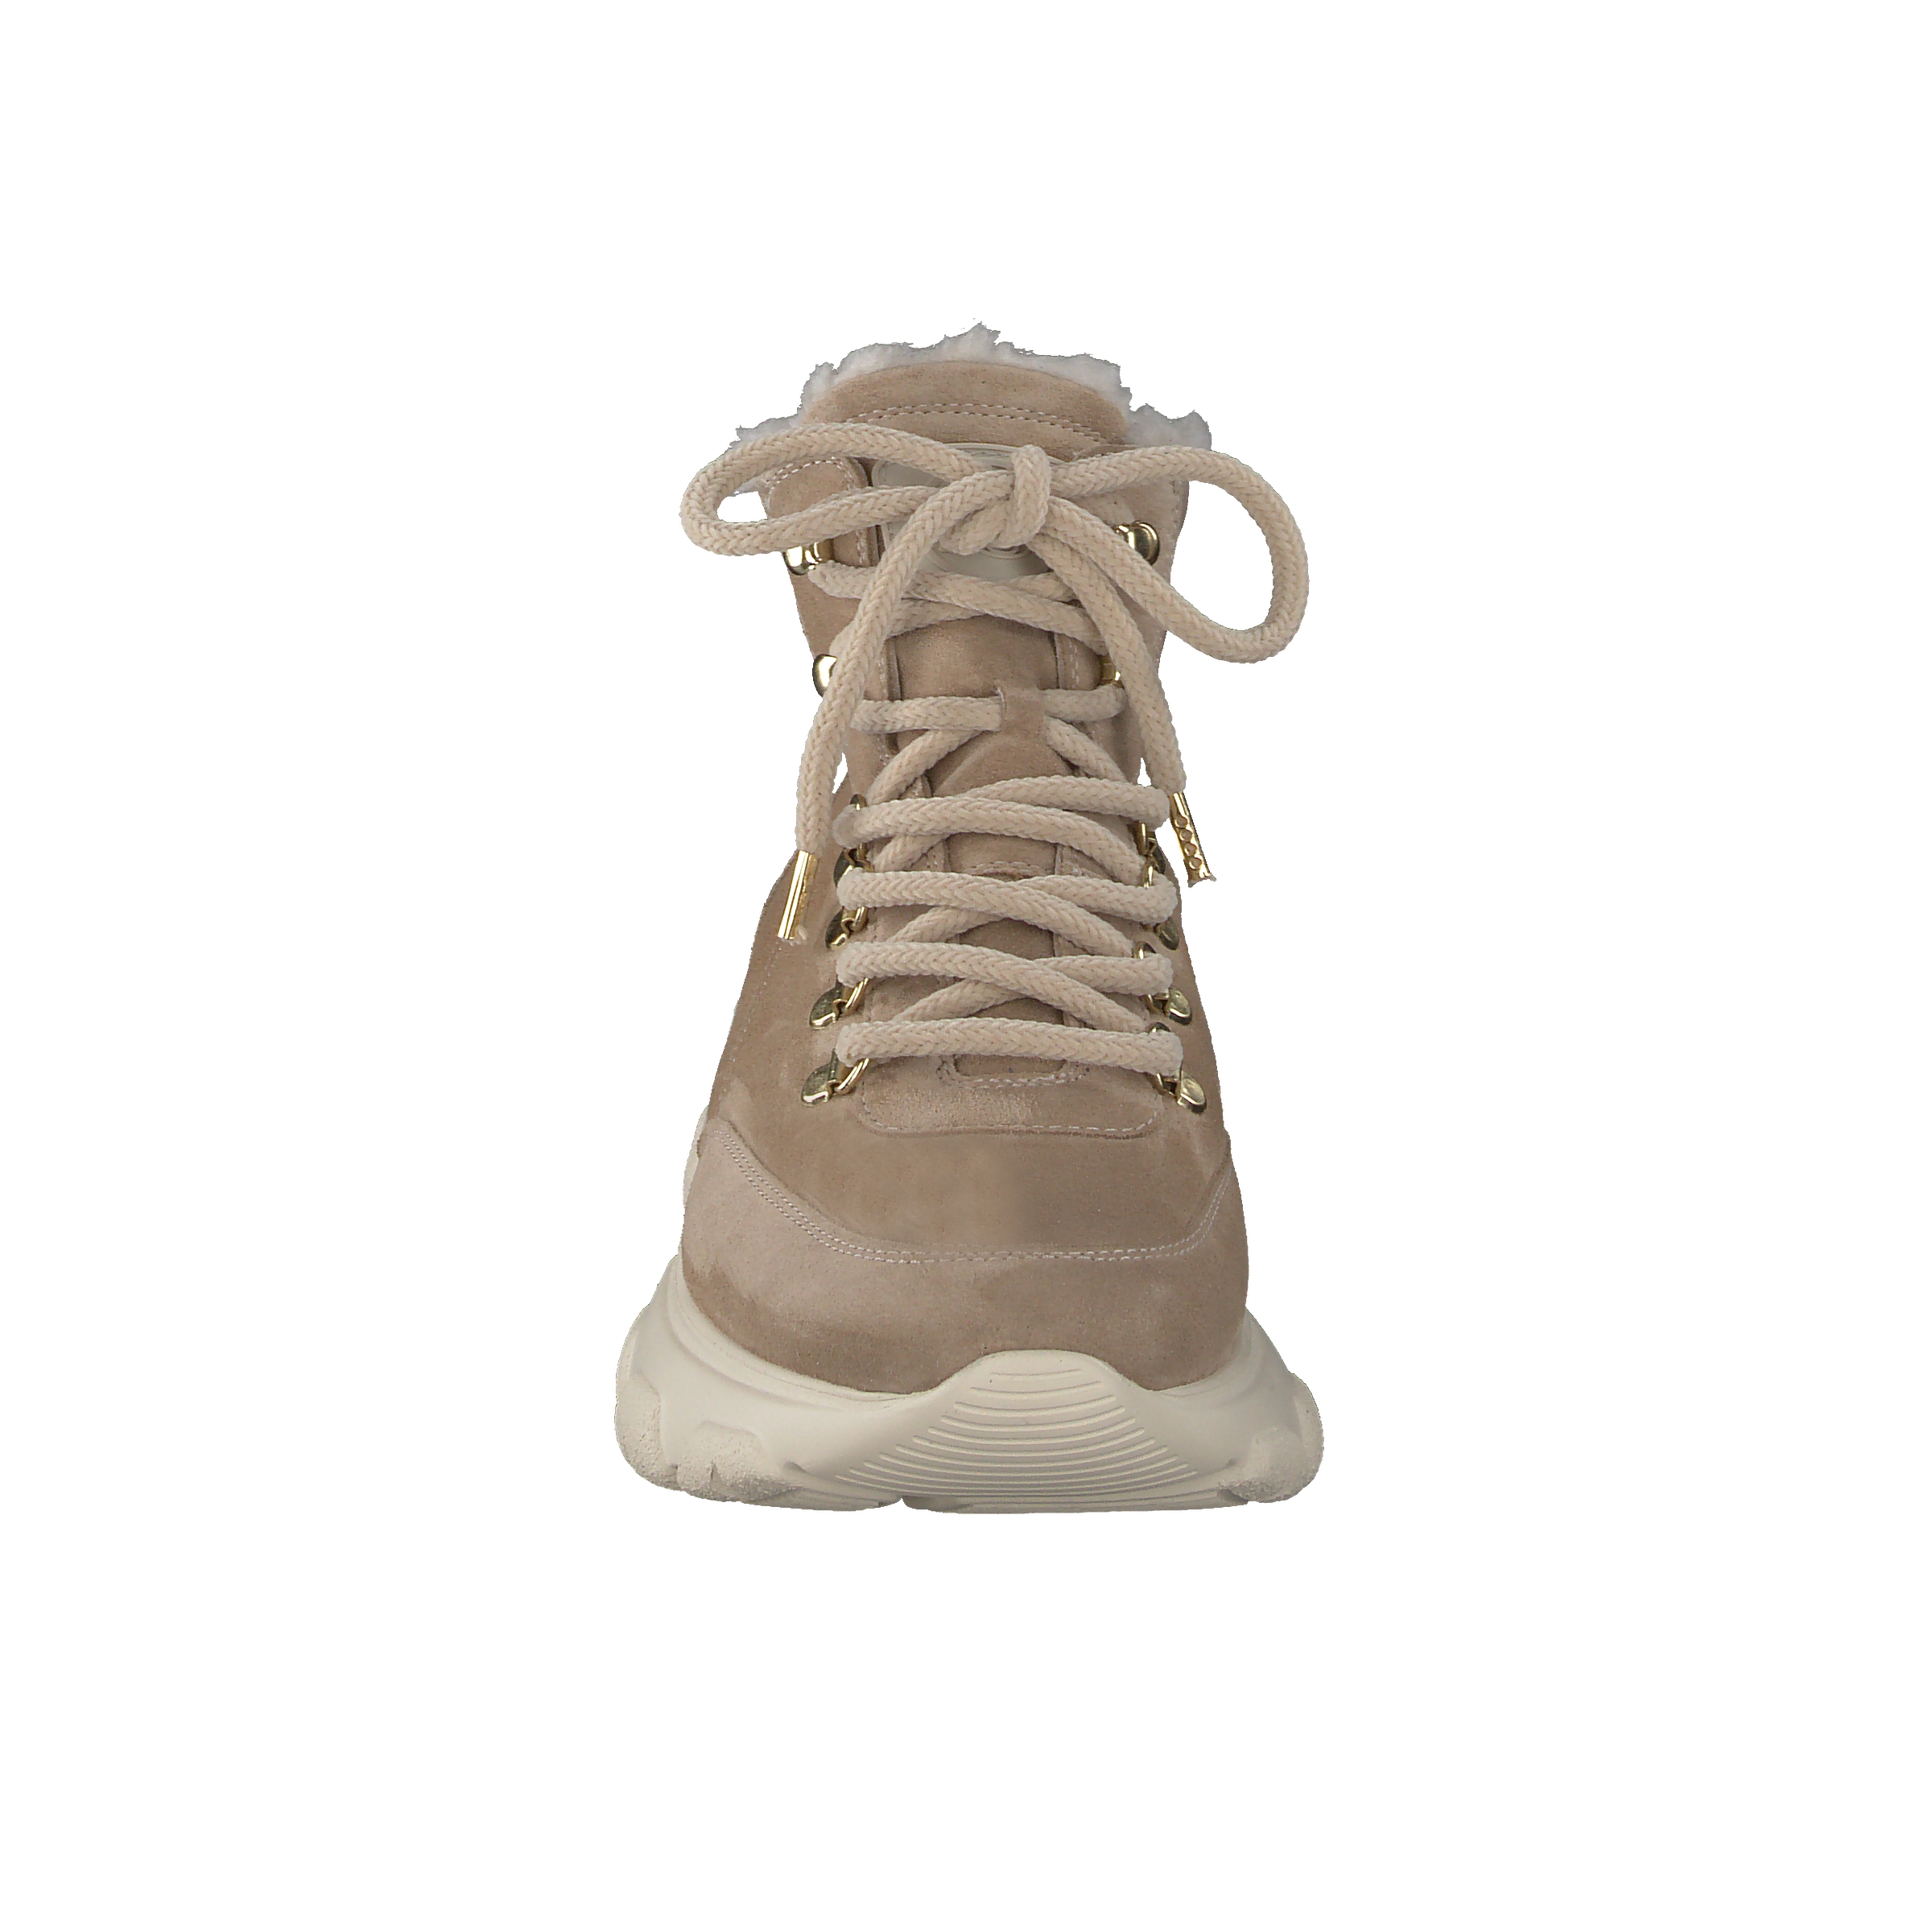 Paul Green Hightop-Sneaker - Beige suede leather